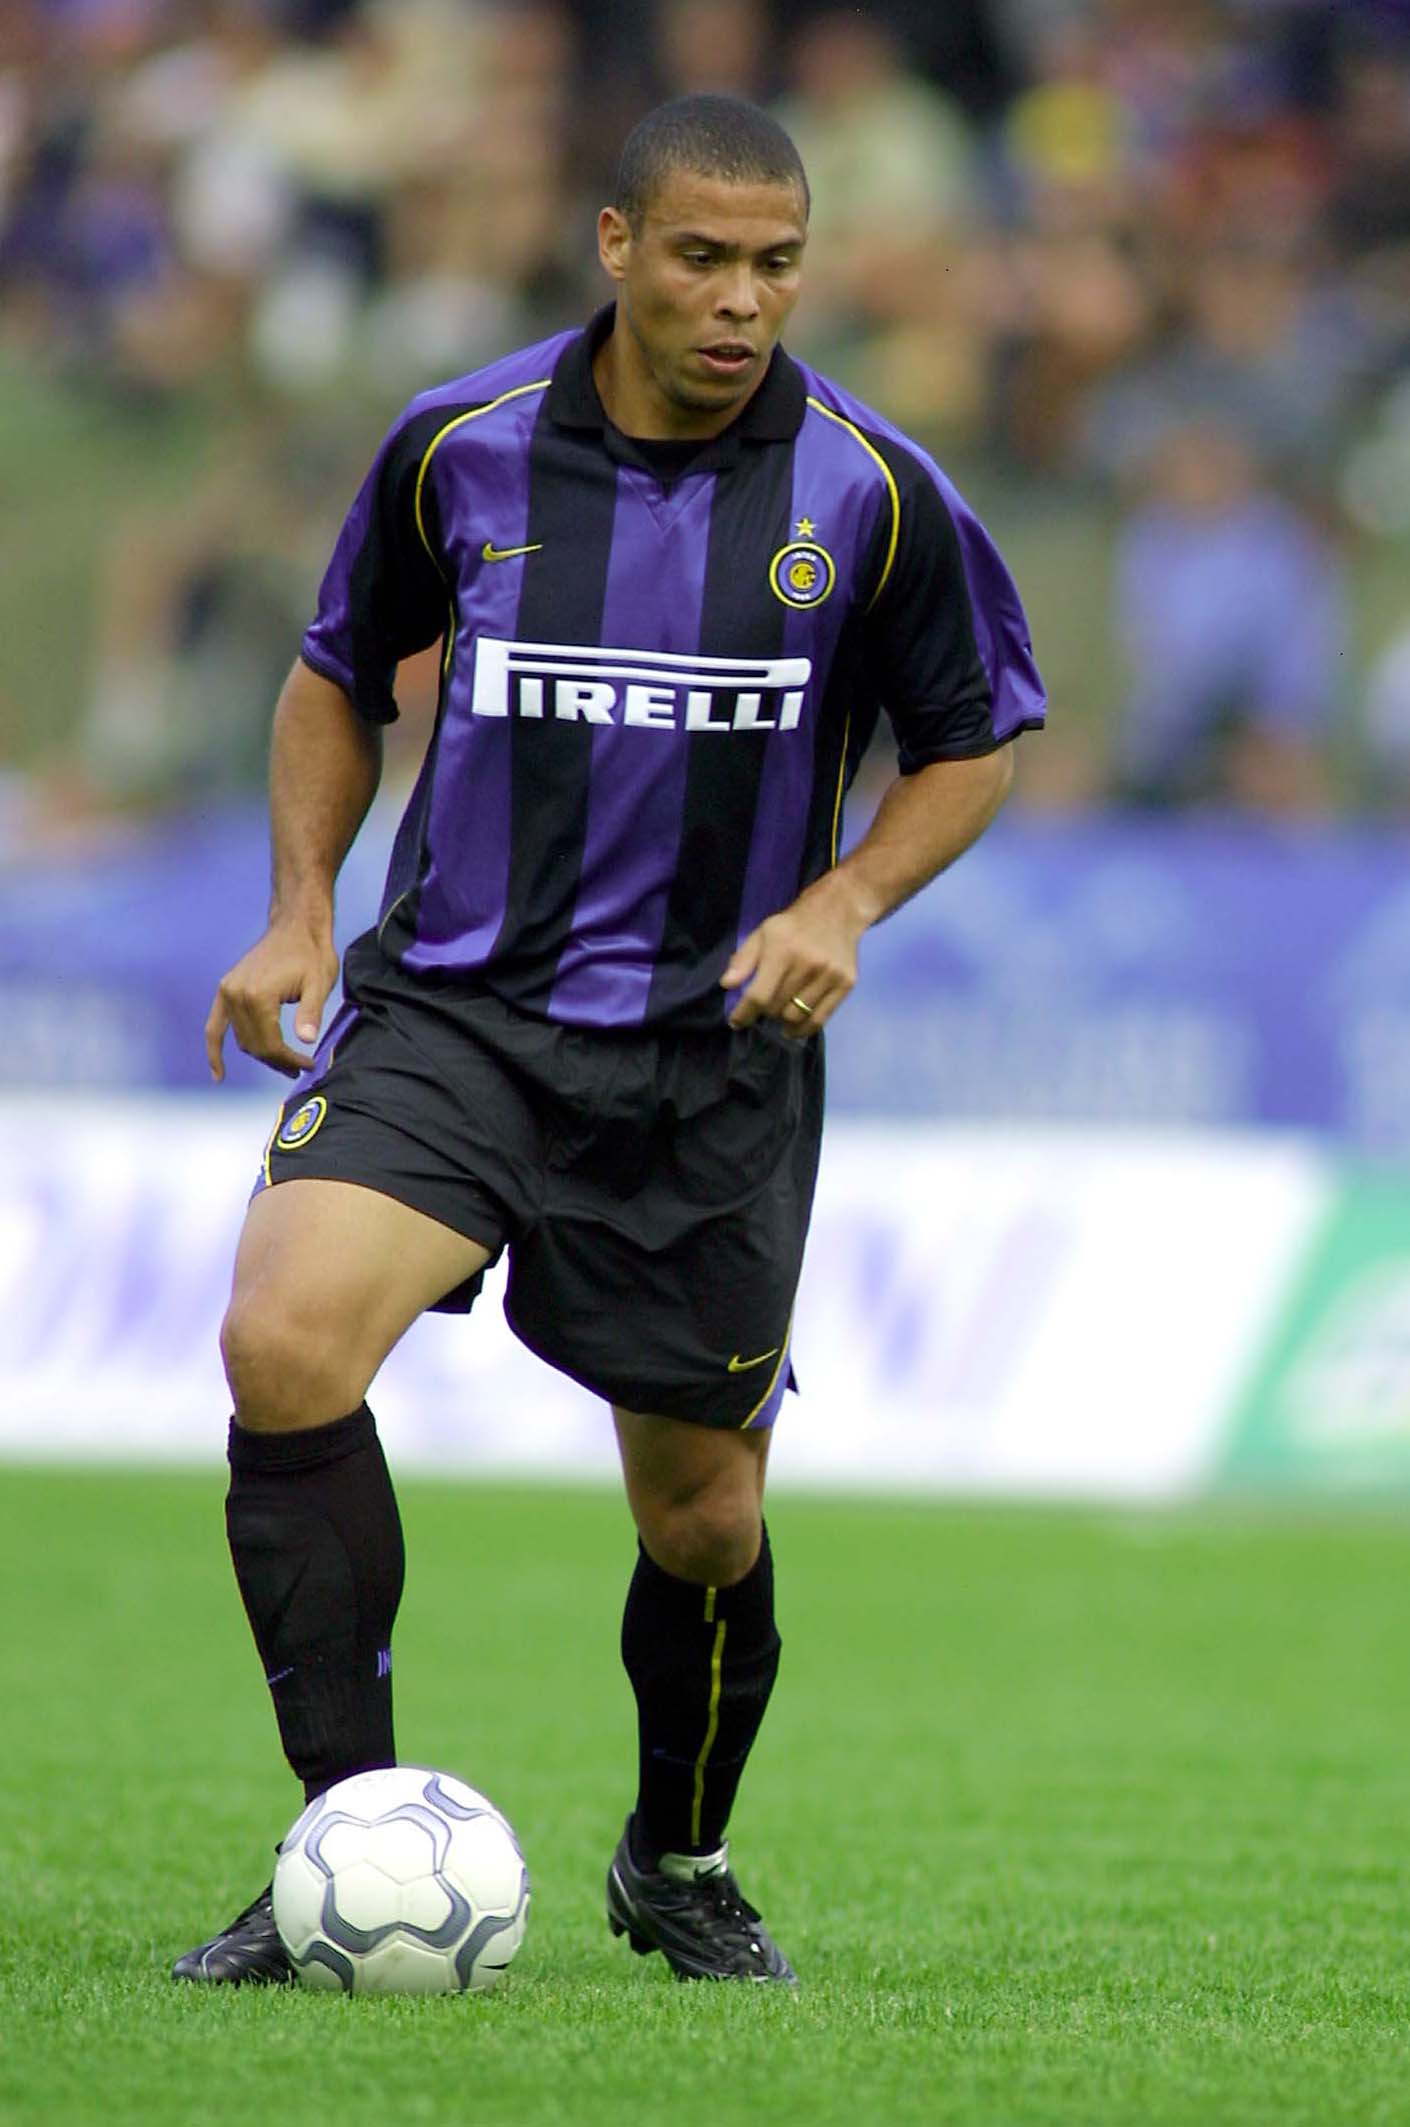 File:FC Inter - 2001 - Ronaldo.jpg - Wikipedia